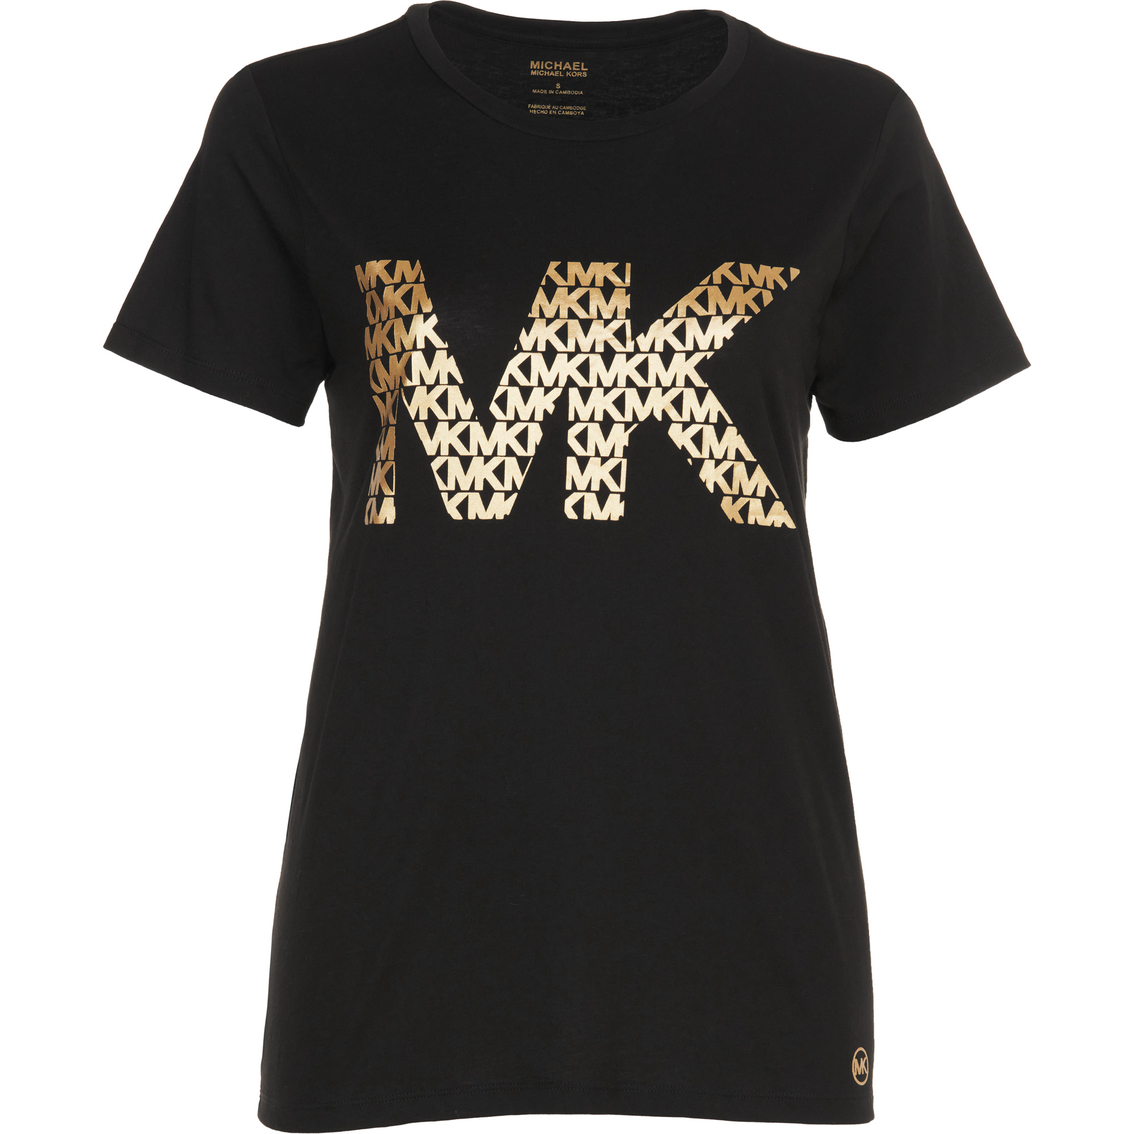 mk clothing